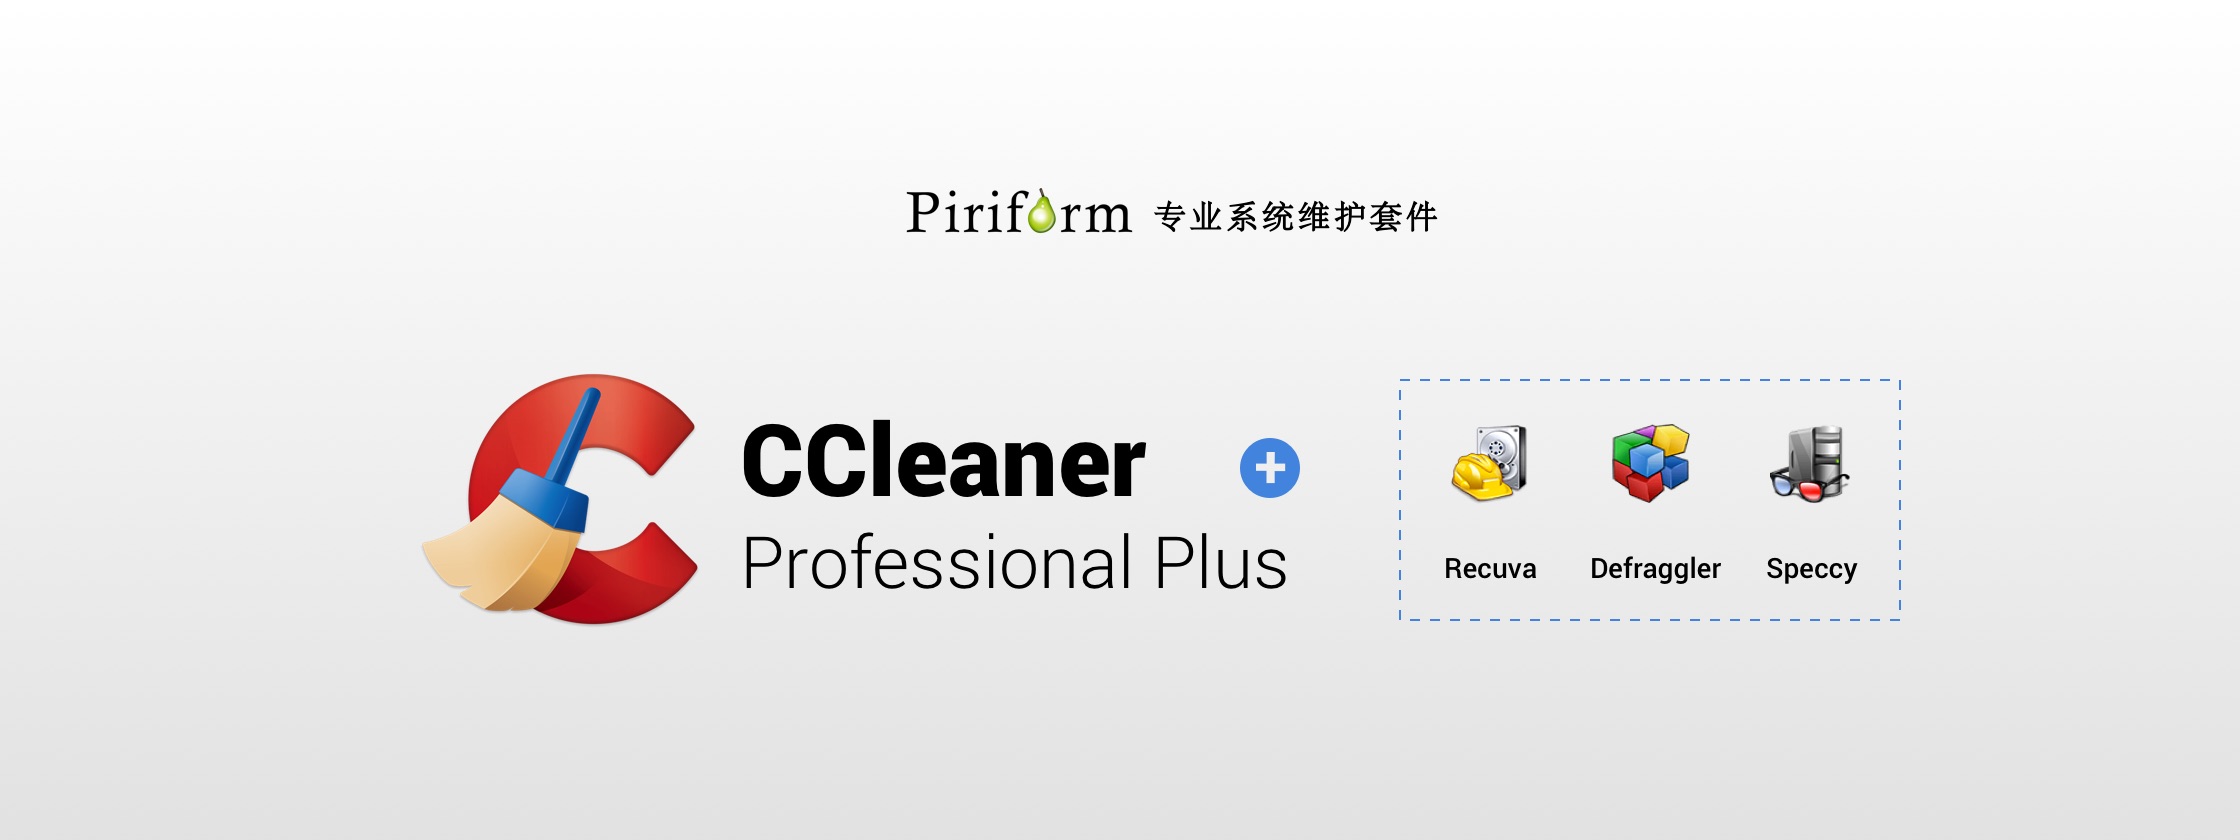 CCleaner Professional Plus，知名开发商 Piriform 旗下系统维护套件